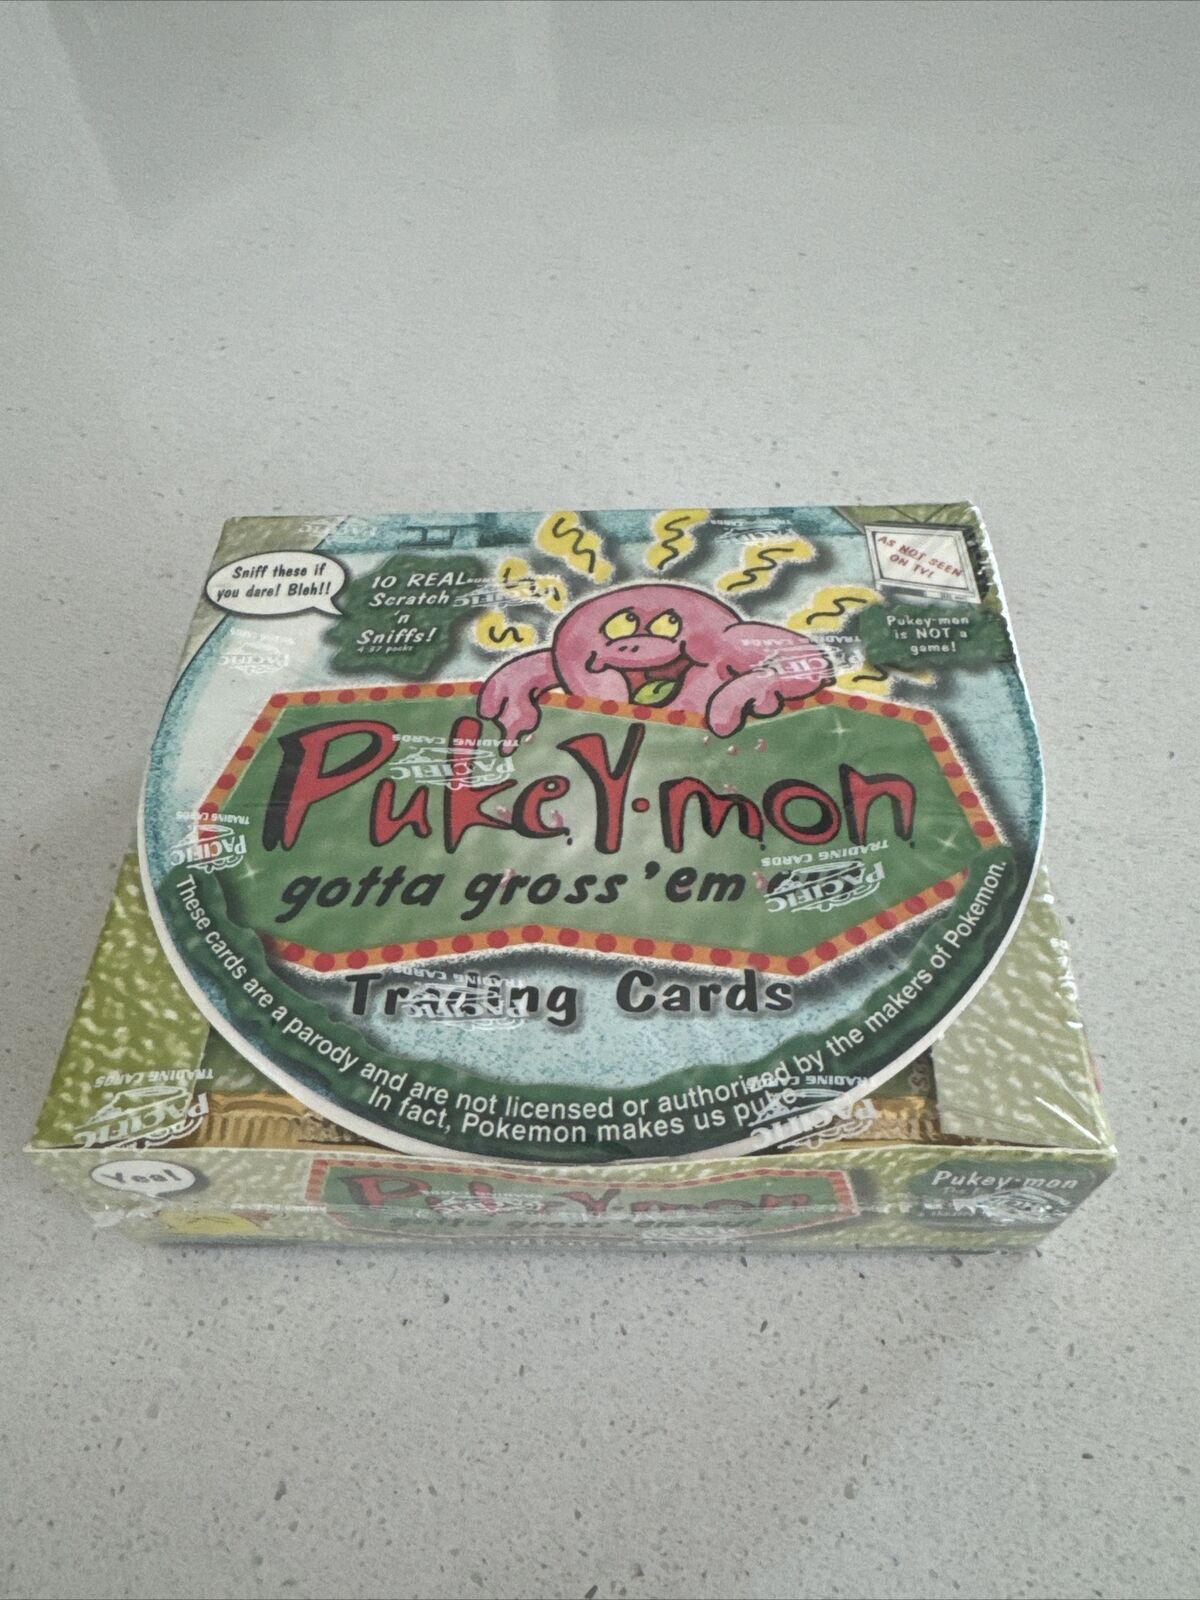 PUKEY-MON NEW/SEALED BOX 36-PACKS PUKEYMON POKEMON PARODY LIKE GARBAGE PAIL KIDS